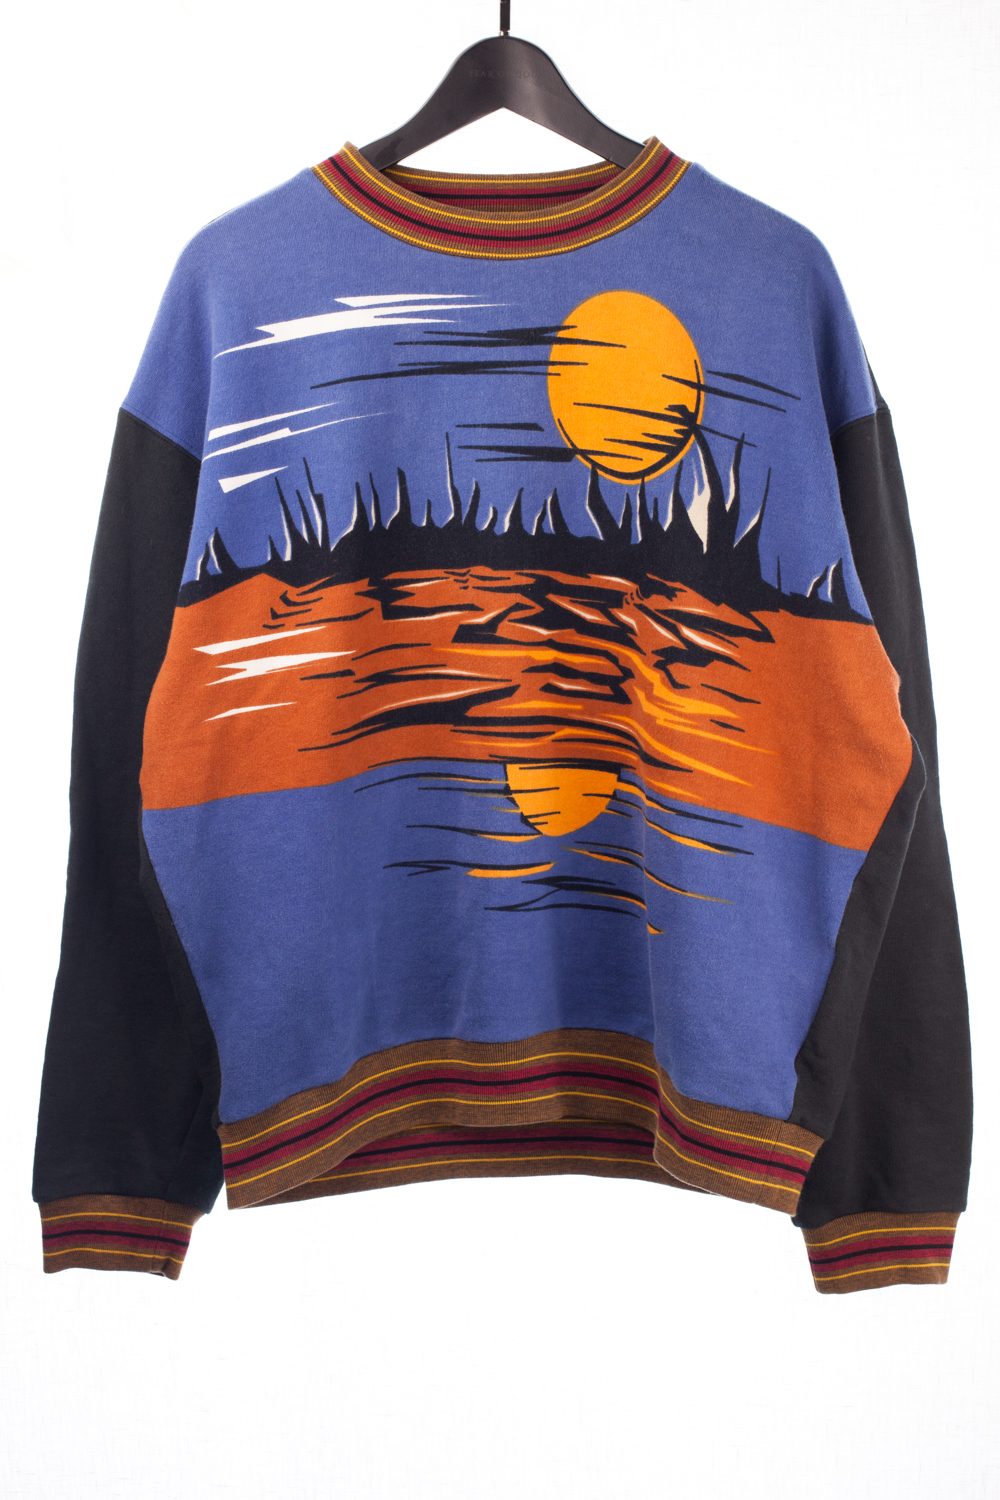 SS13 Sunrise/Moolight Sweater